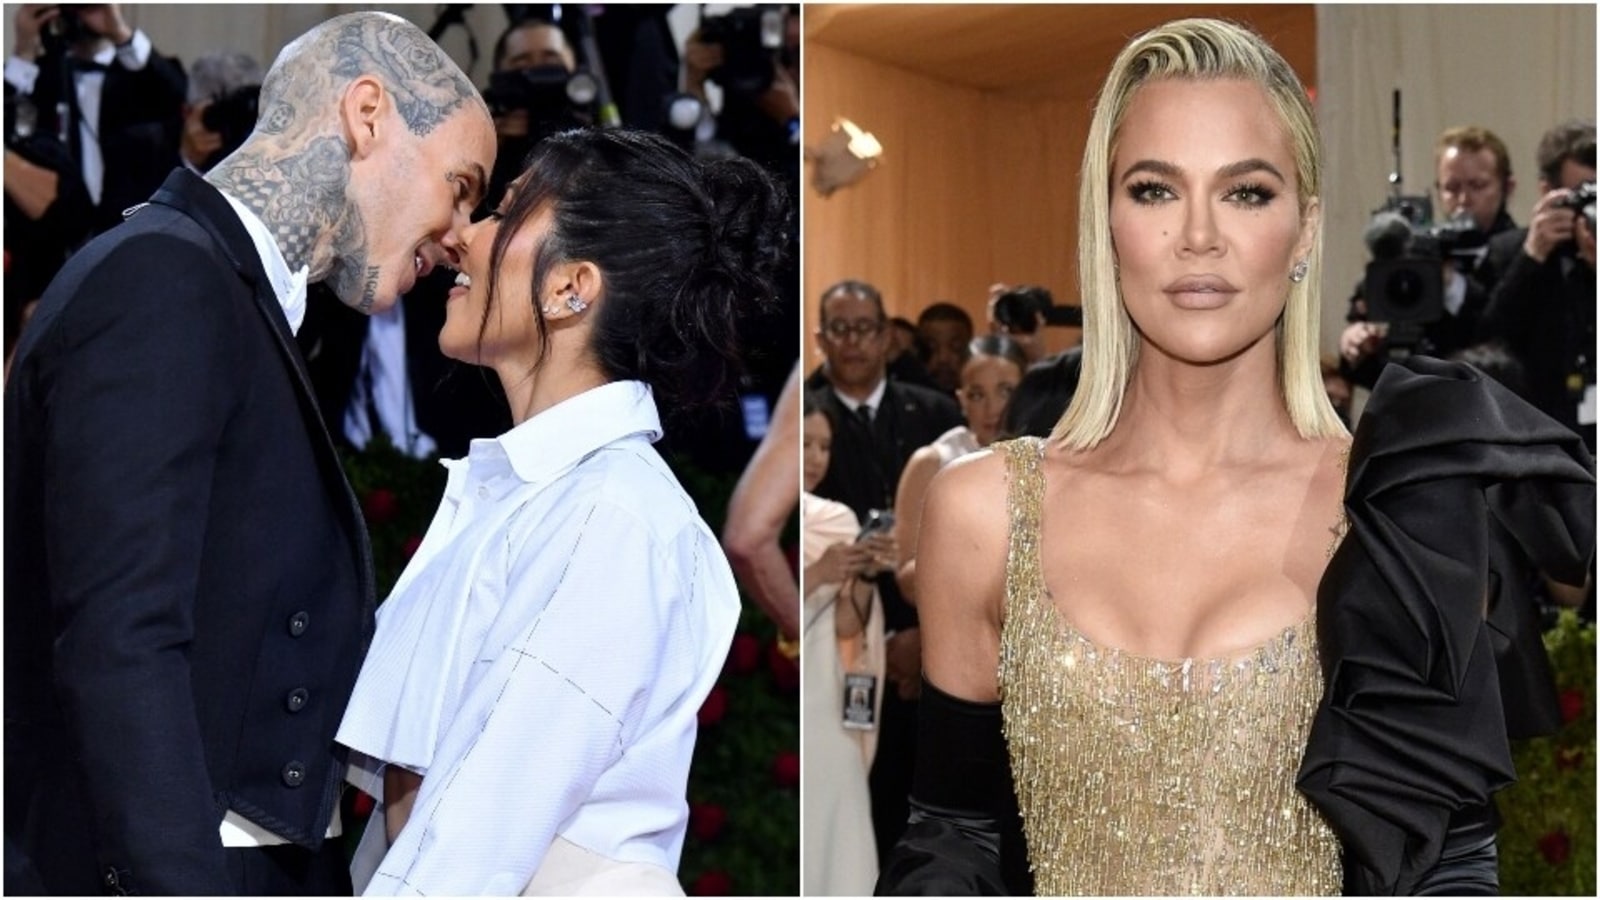 Newlyweds Kourtney Kardashian and Travis Barker arrive in style, Khloe Kardashian turns into goddess for Met Gala debut